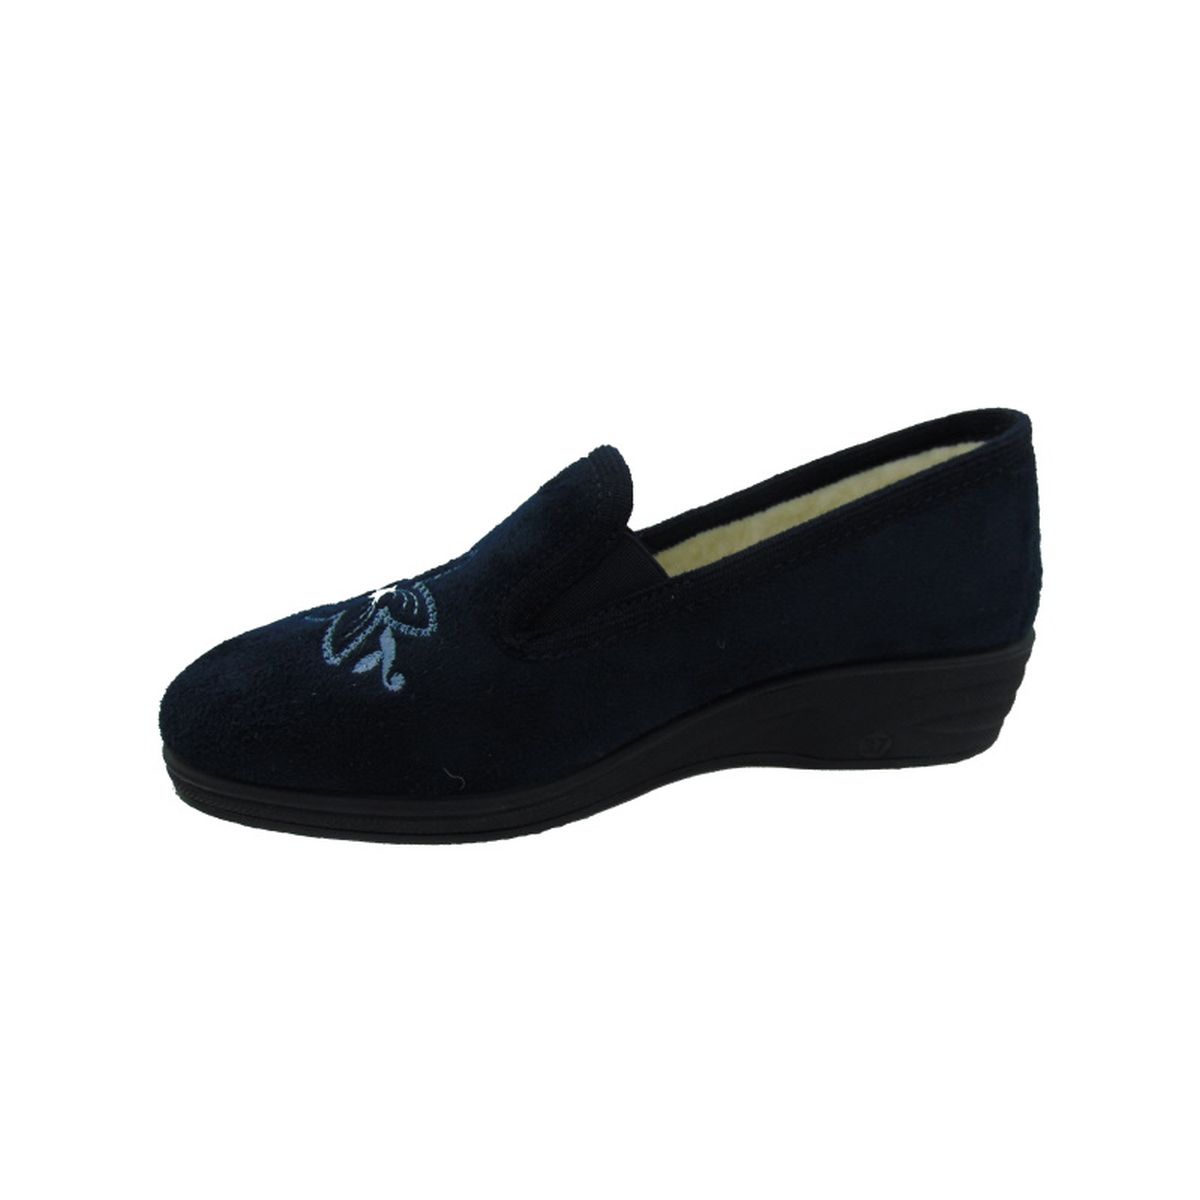 Pantofola Donna Emanuela articolo 825 colore blu con interno lana, Made in Italyimg_3